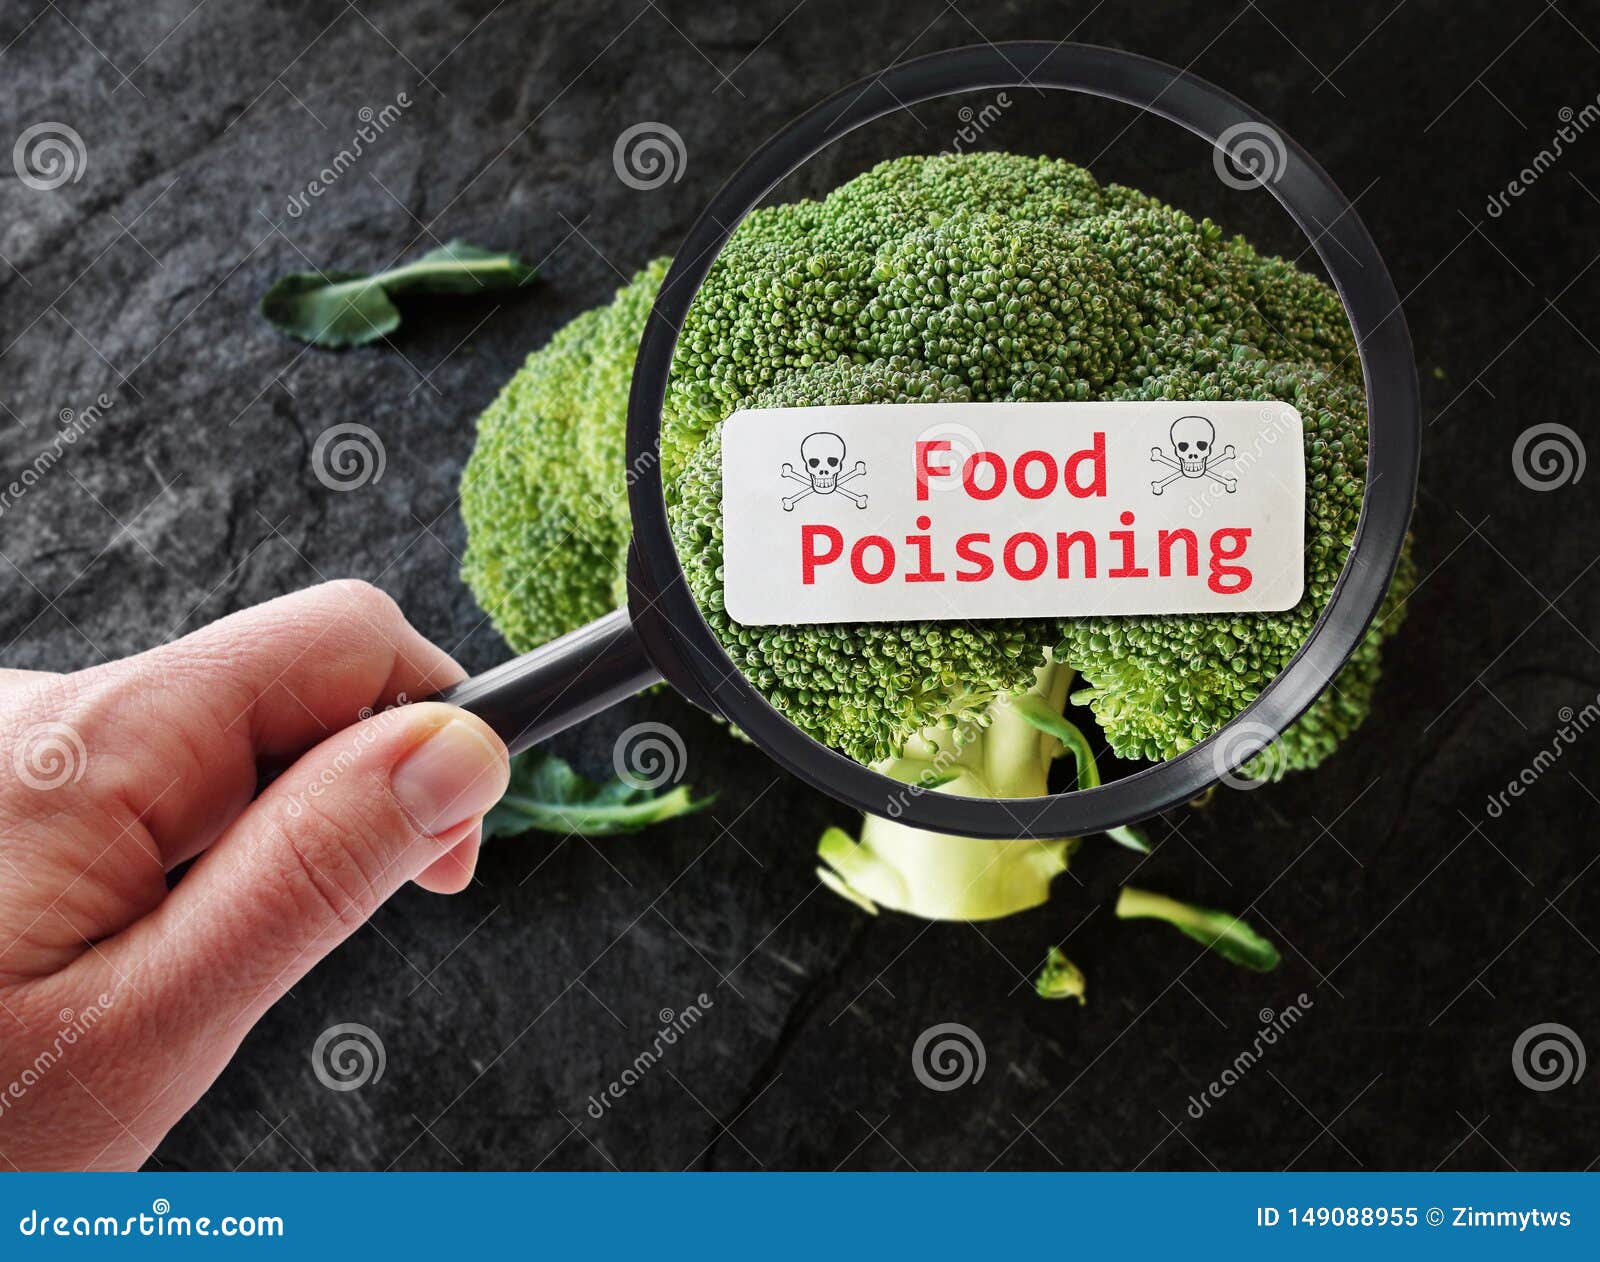 detecting food poisoning